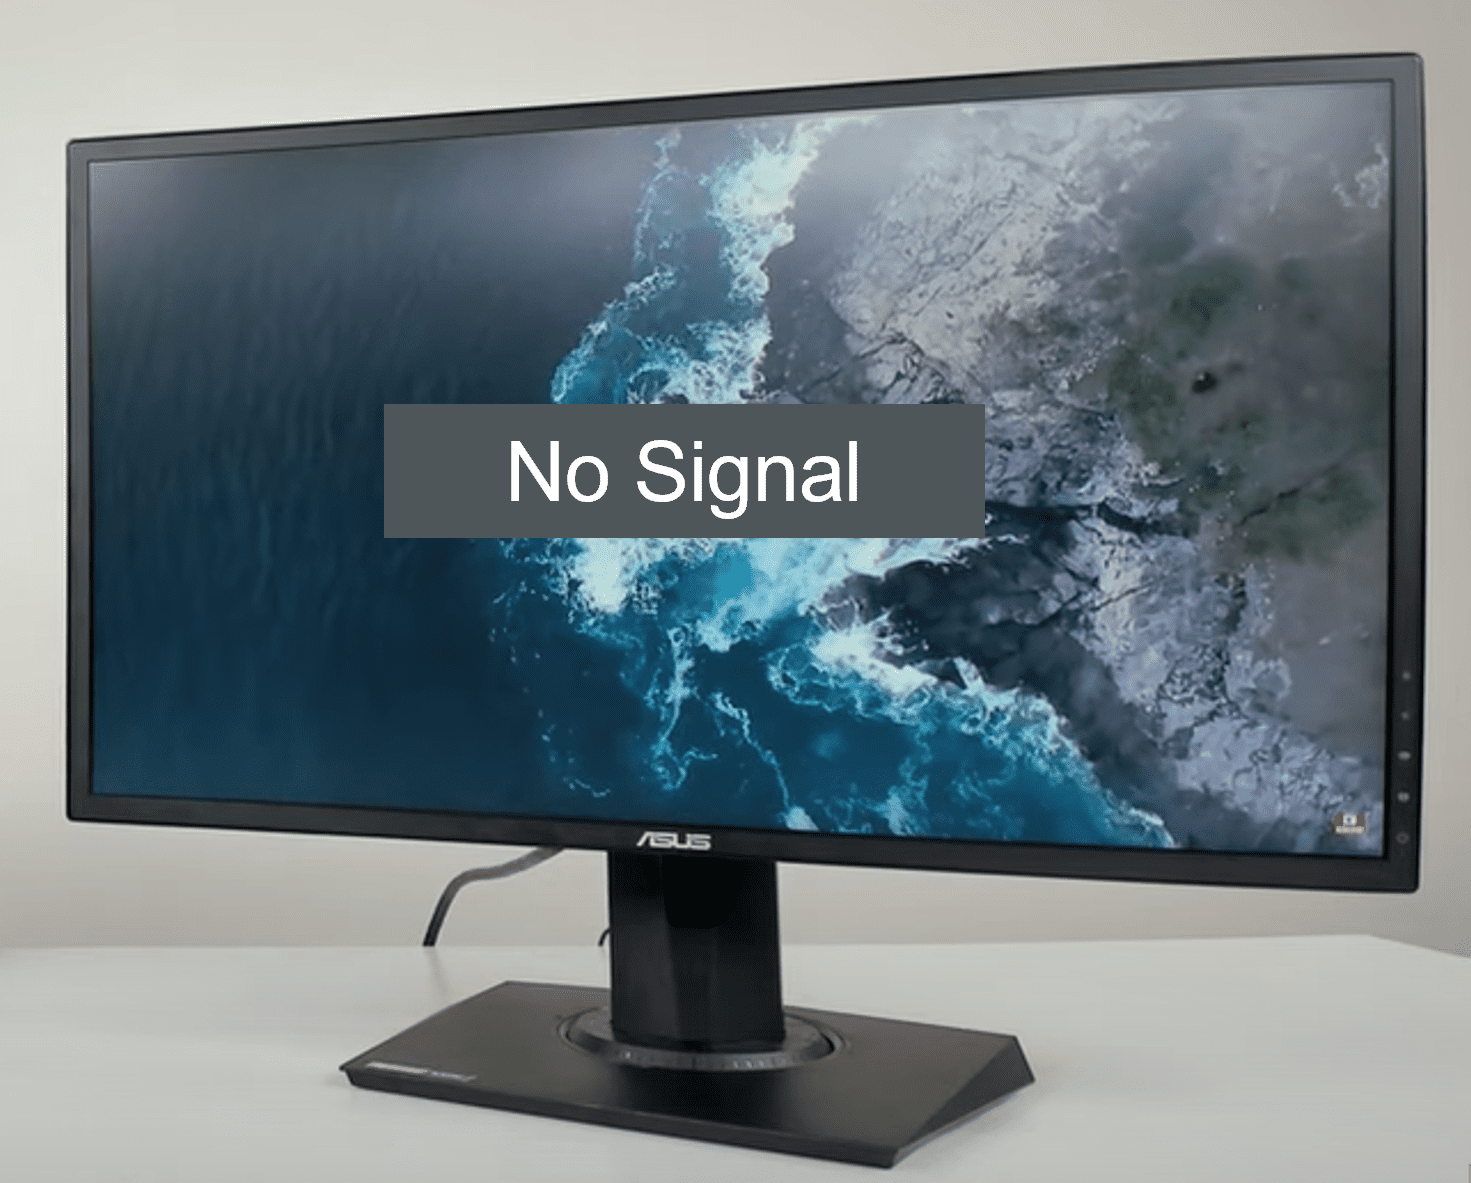 aoc monitor troubleshooting no signal